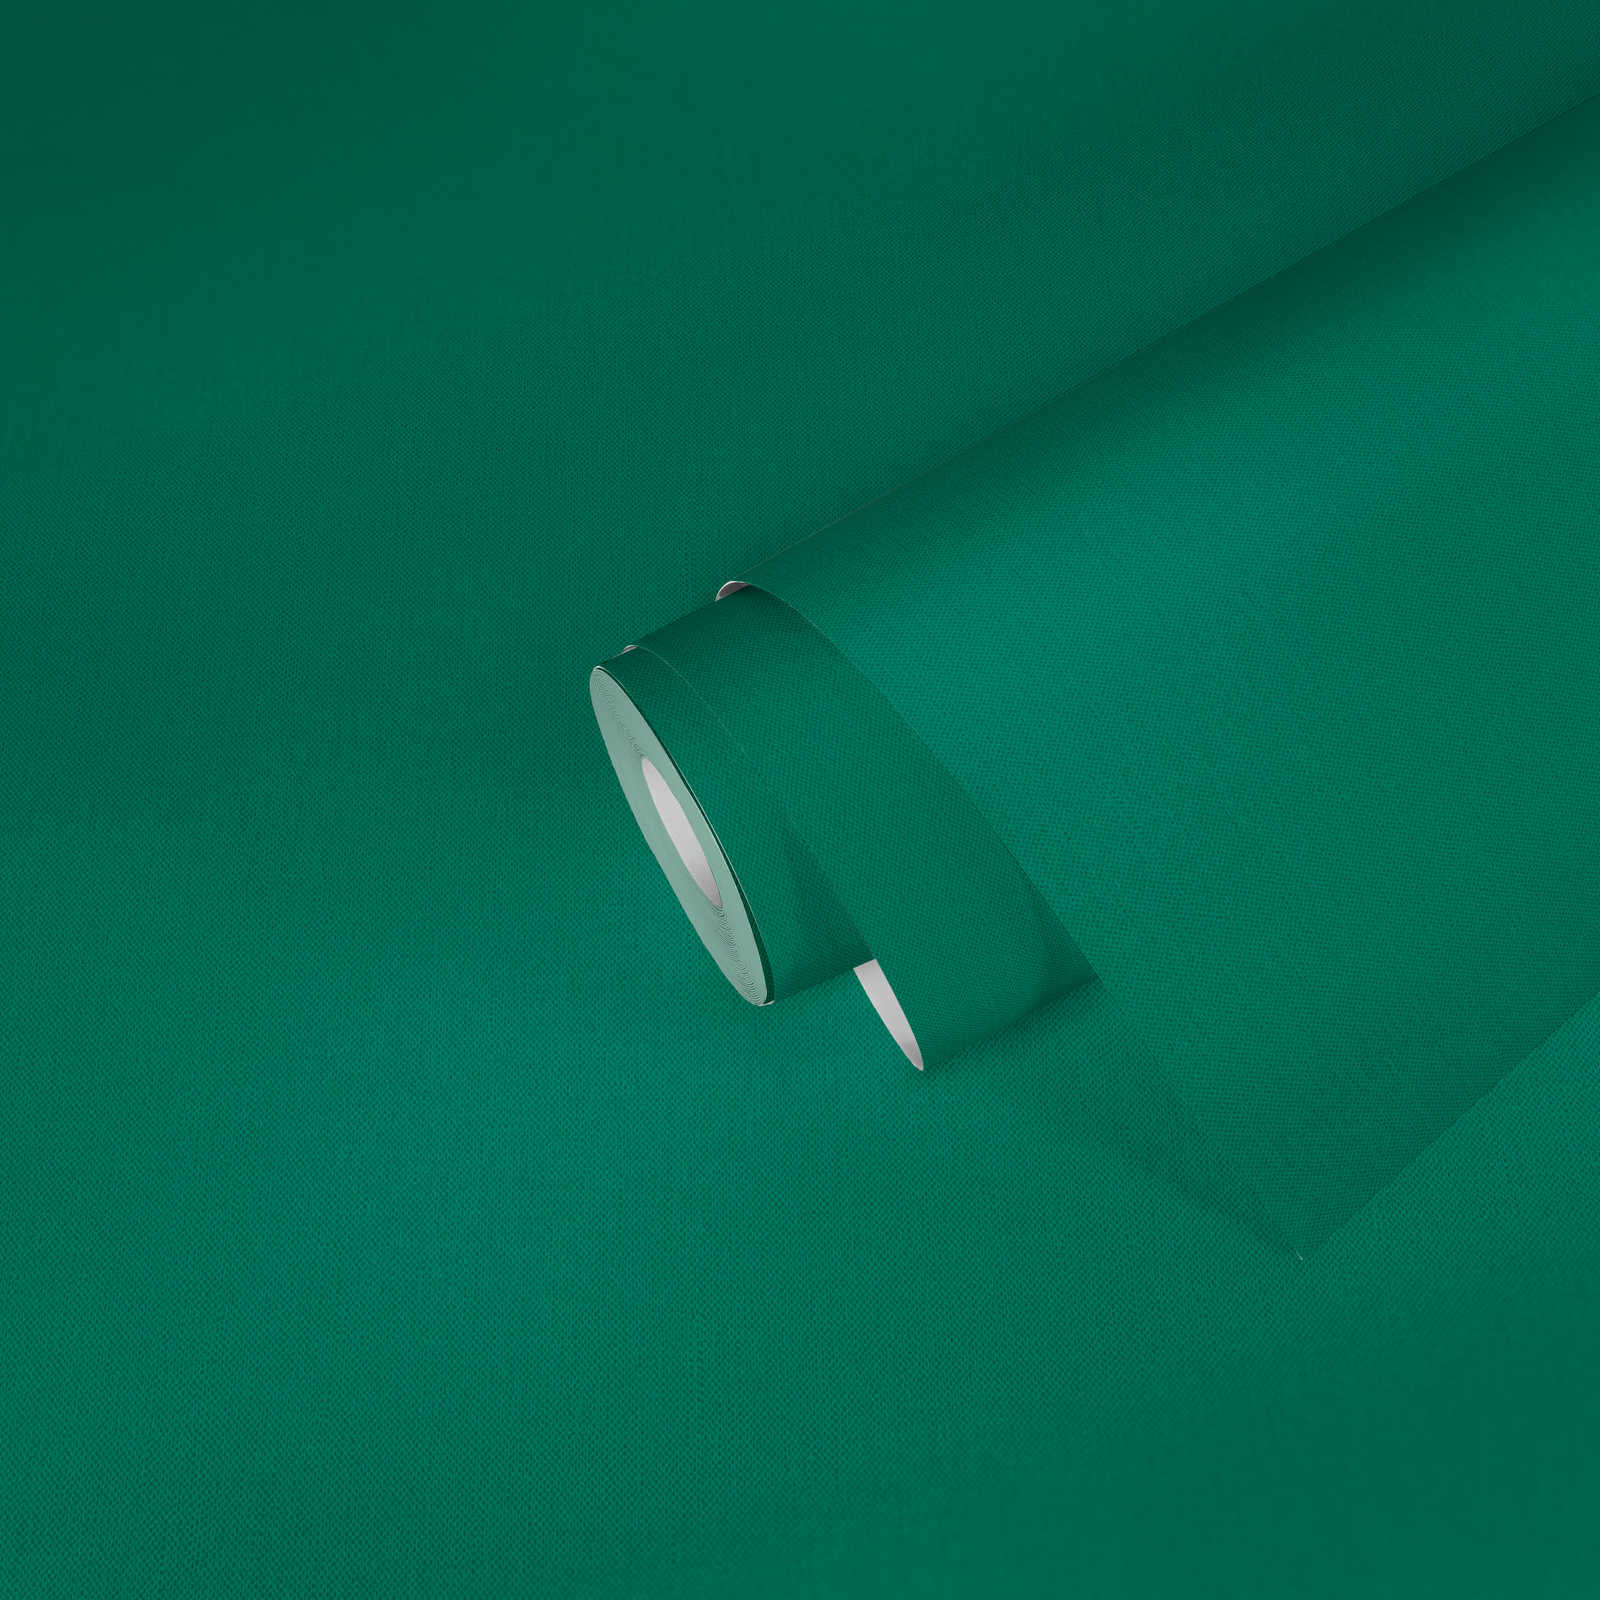             Tapete Grün mit Textilstruktur mattes Uni Signalgrün
        